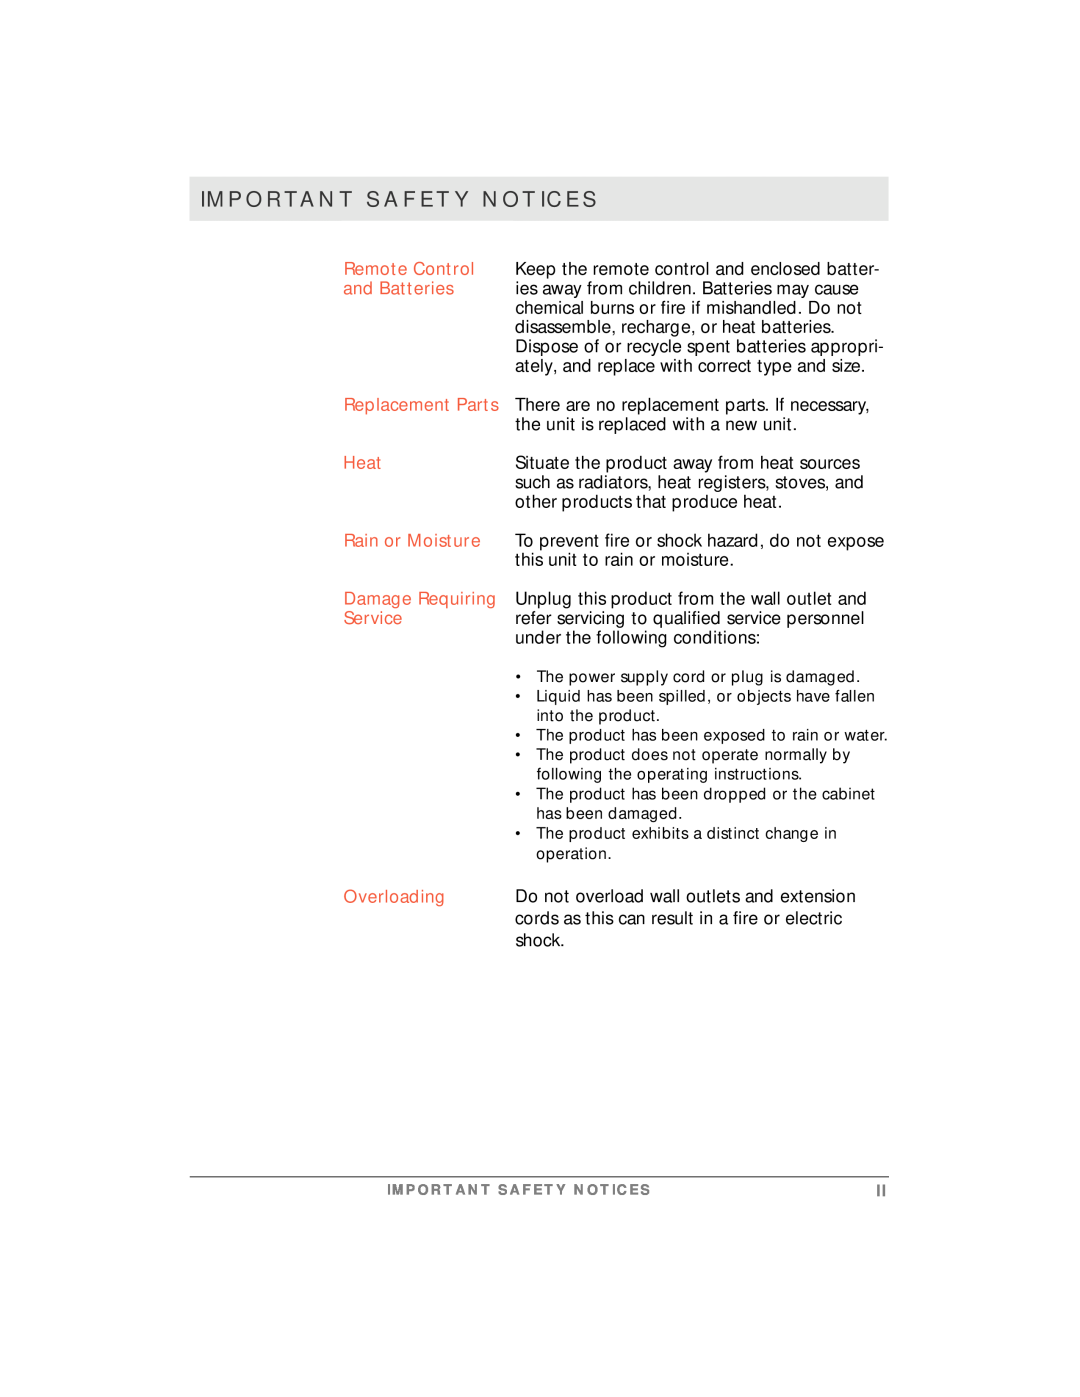 Motorola simplefi manual Heat, Rain or Moisture, Service, Overloading, Important Safety Notices 